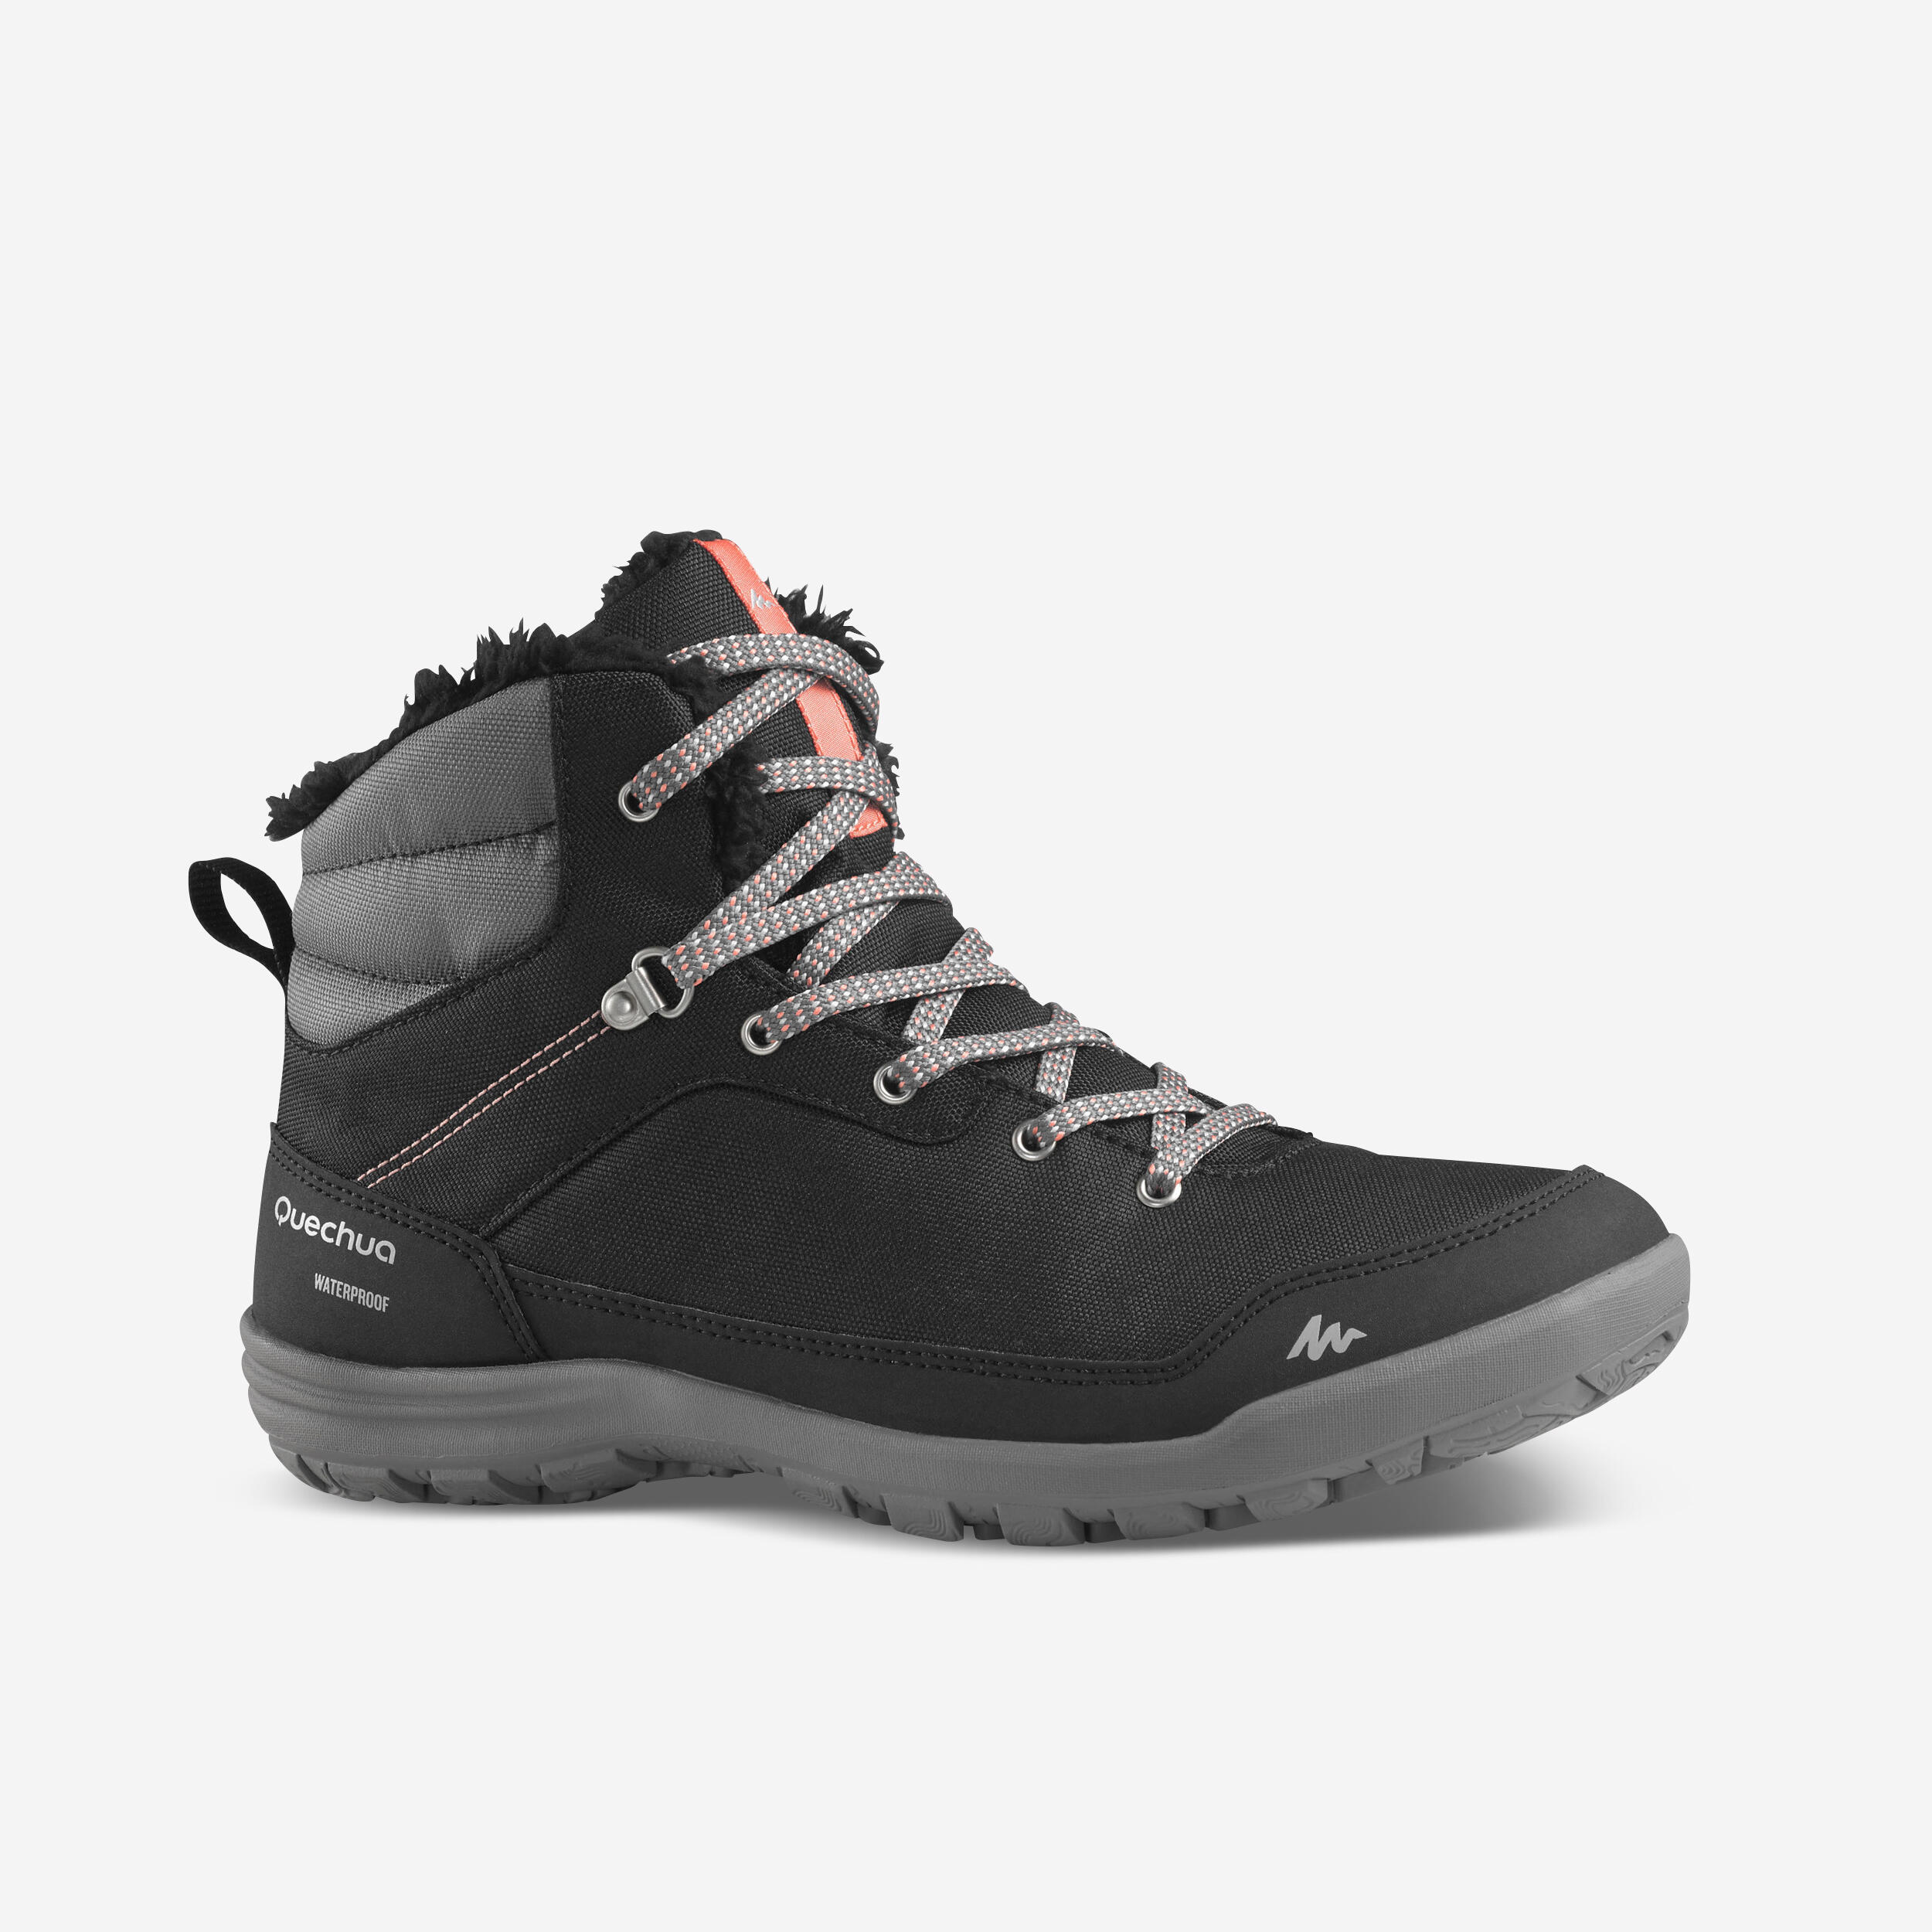 Buy Women's Warm and Waterproof Hiking Boots - SH100 WARM - MID